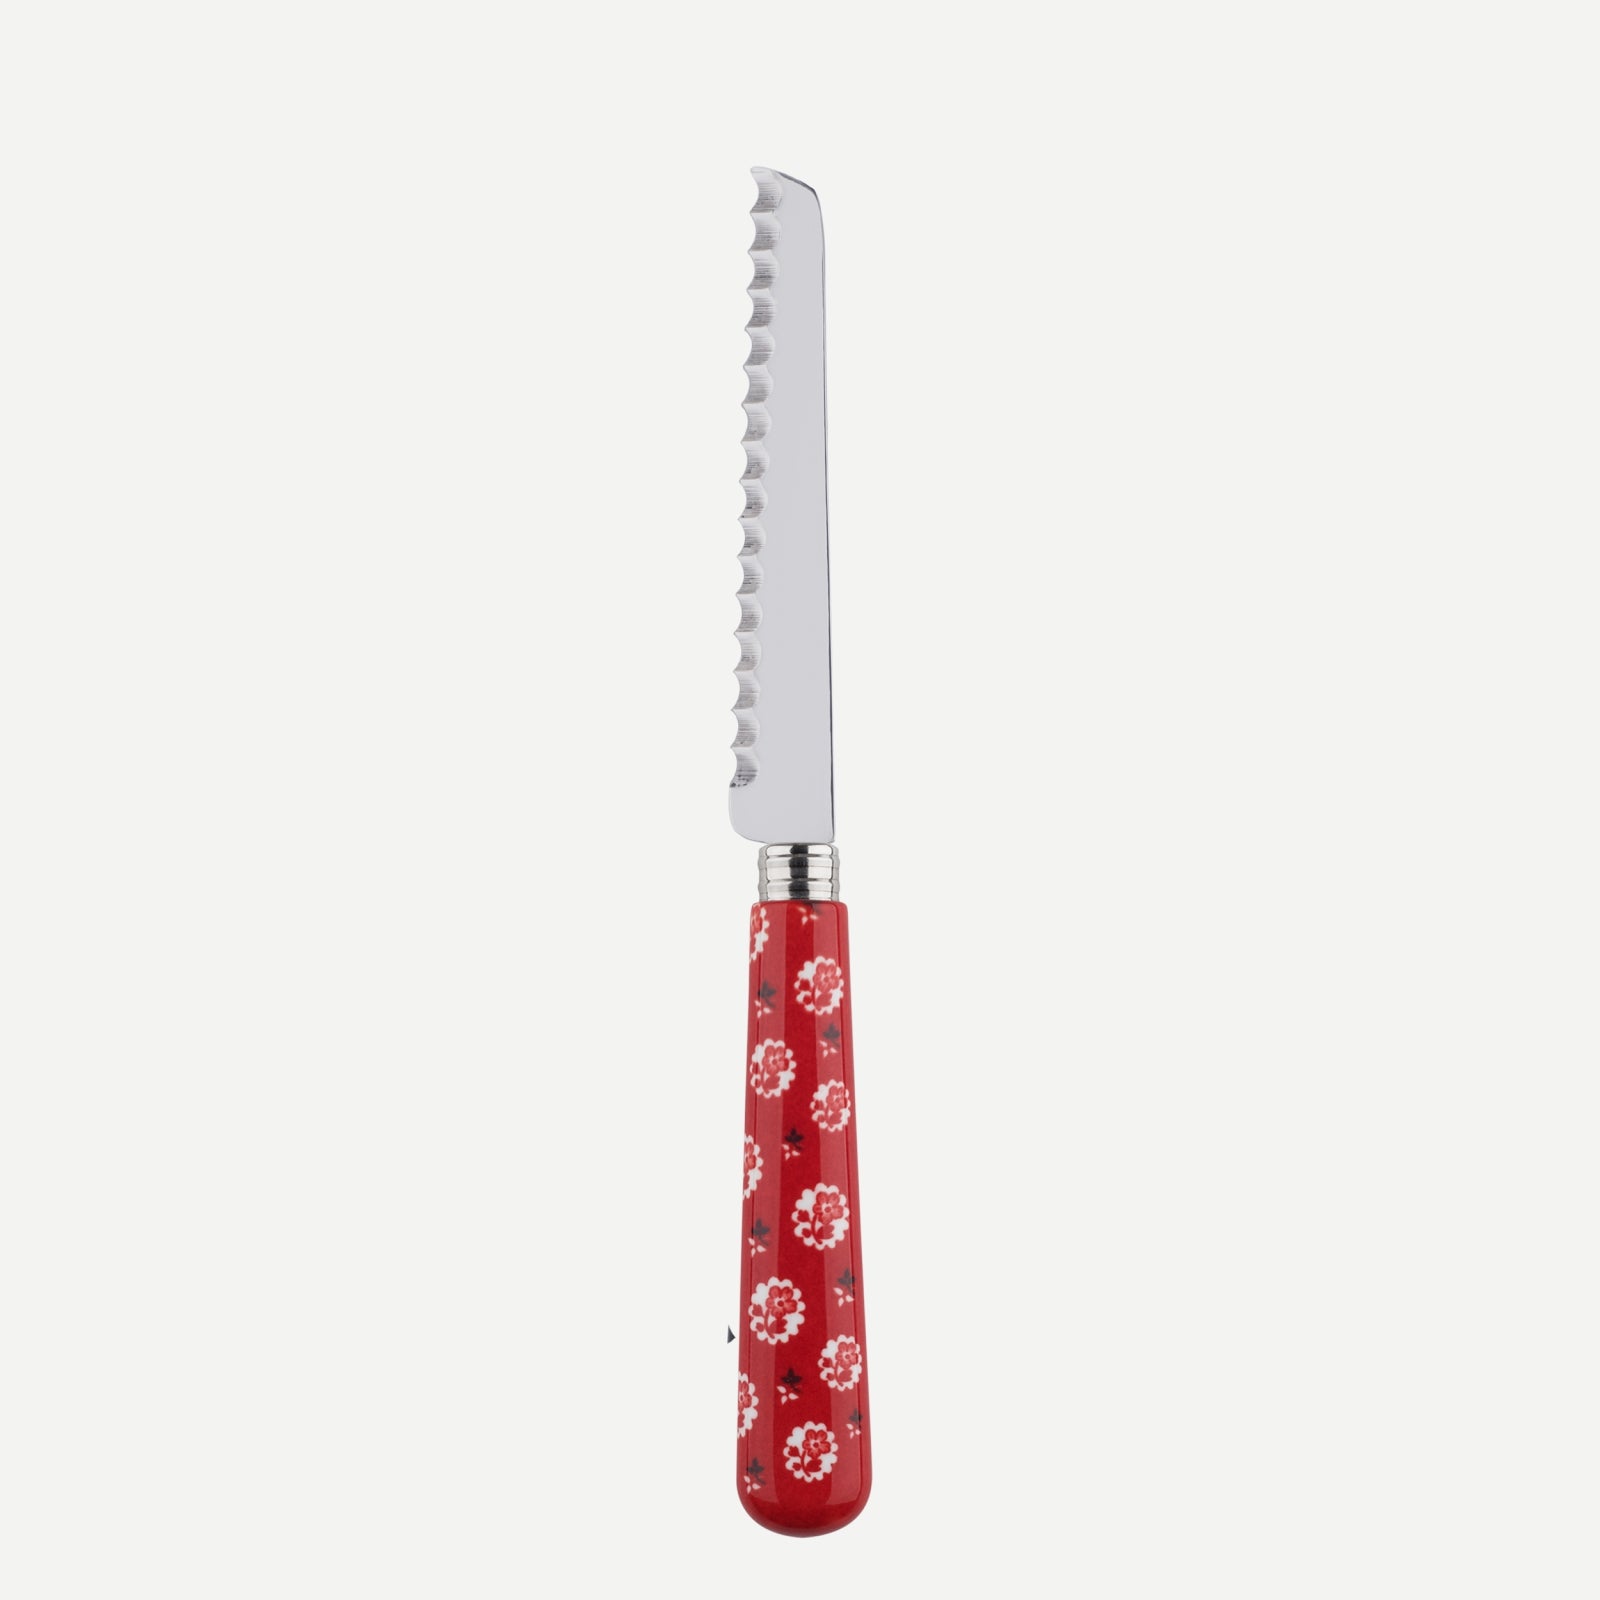 Tomato knife - Provencal - Red